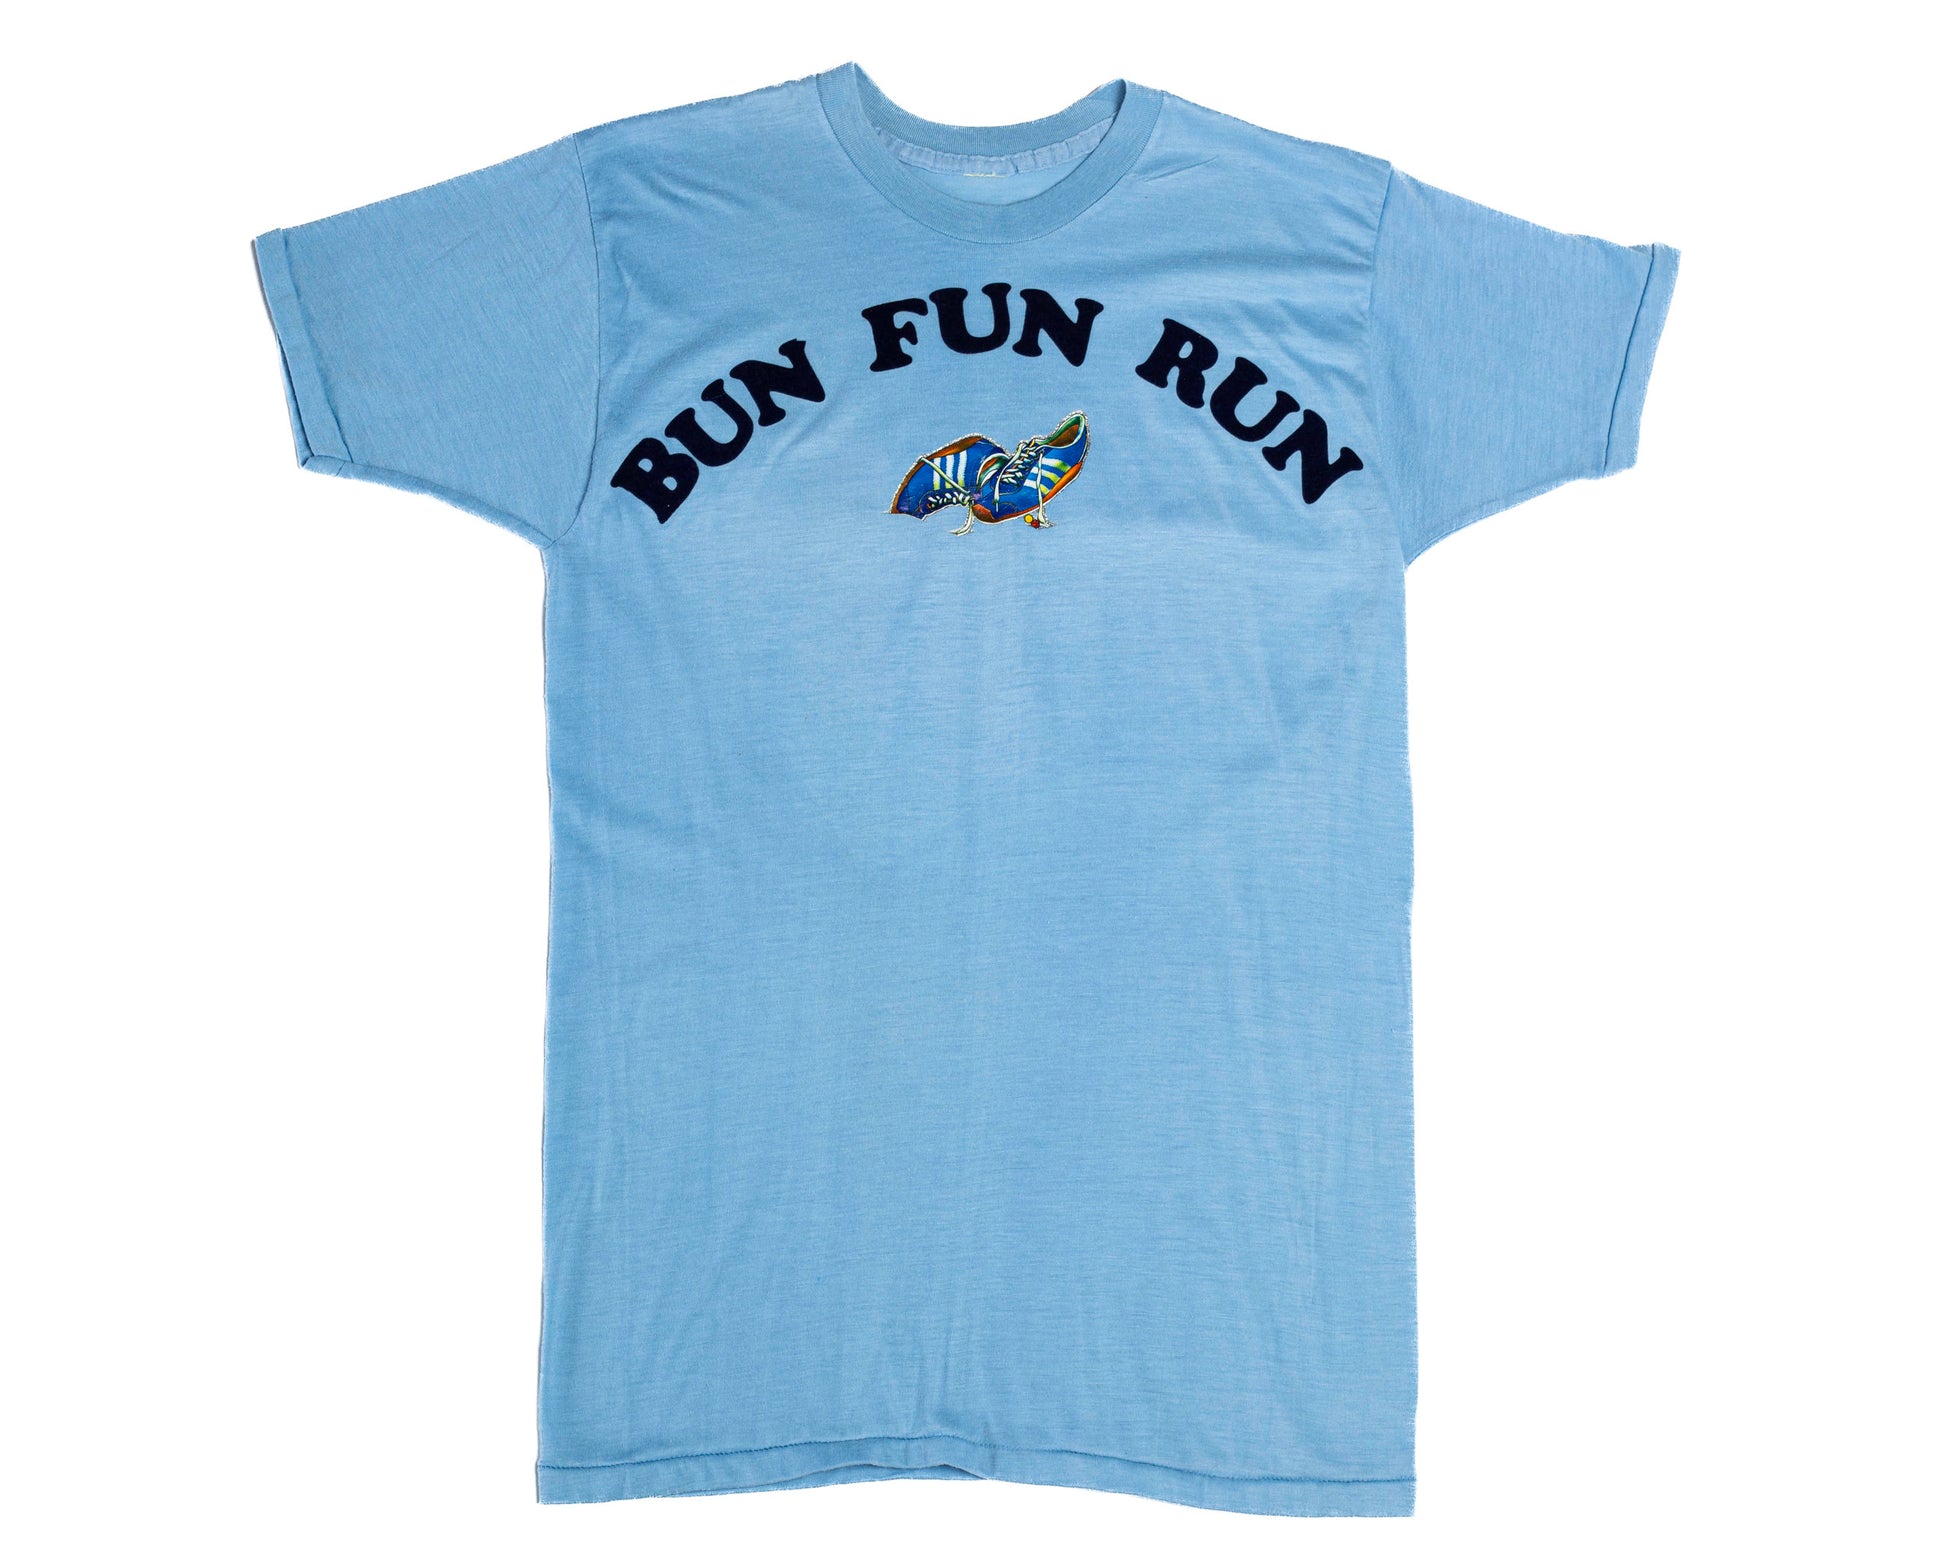 80s Bun Fun Run T Shirt - Men's Small, Women's Medium | Vintage Blue Iron On Felt Graphic Running Shoes T Shirt